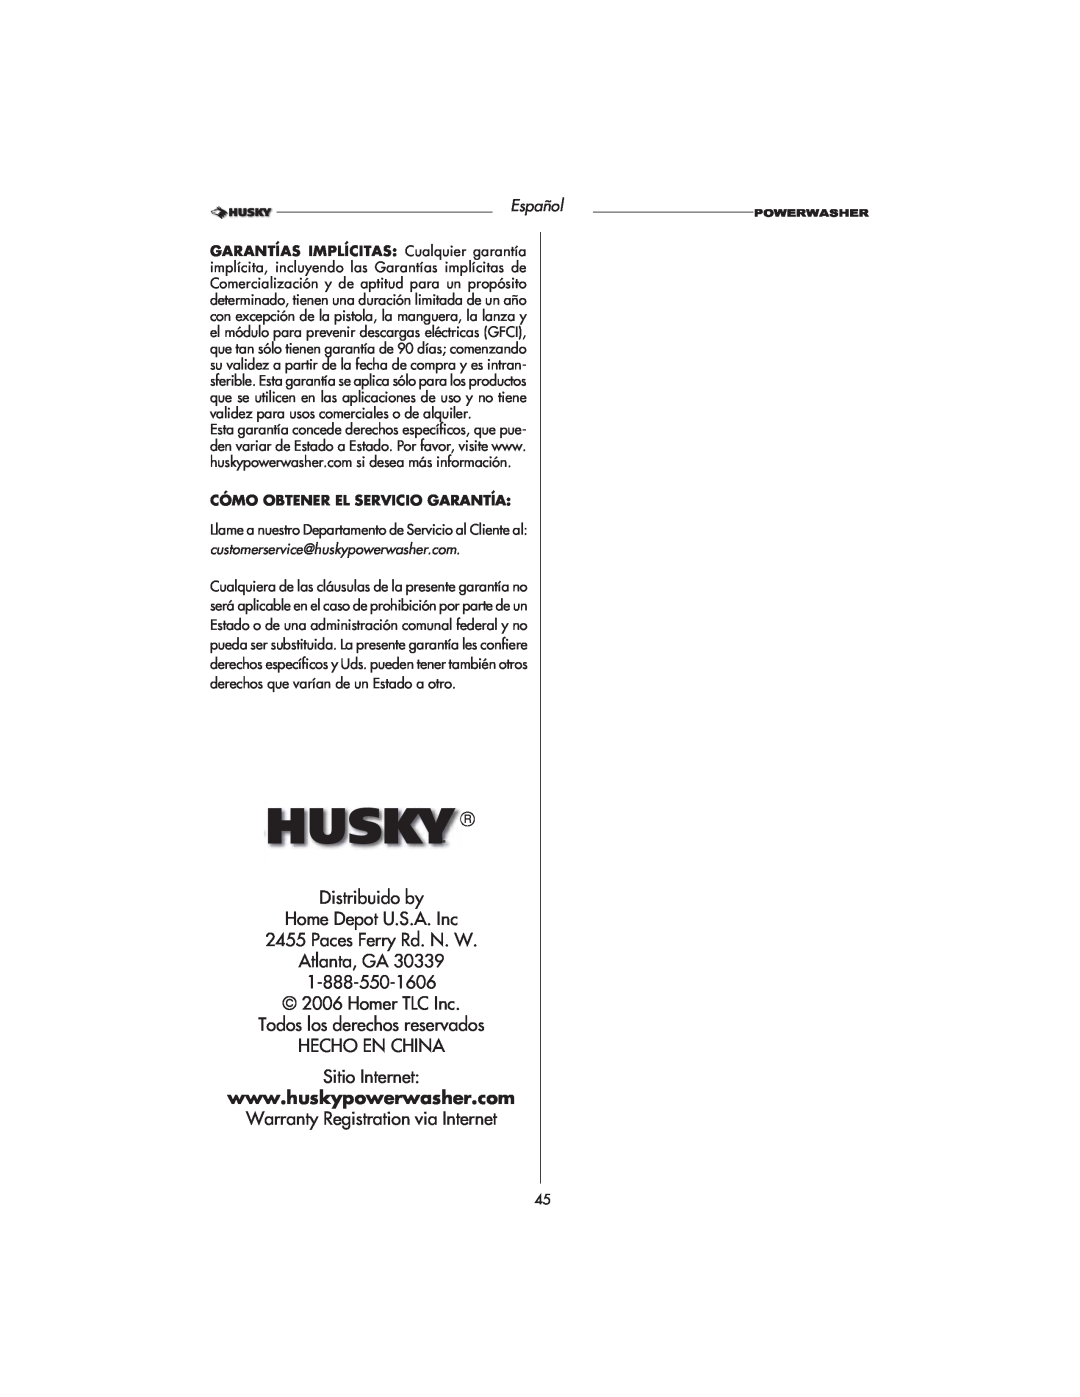 Husky HD1500 warranty Distribuido by Home Depot U.S.A. Inc, Paces Ferry Rd. N. W Atlanta, GA, 1-888-550-1606, Español 